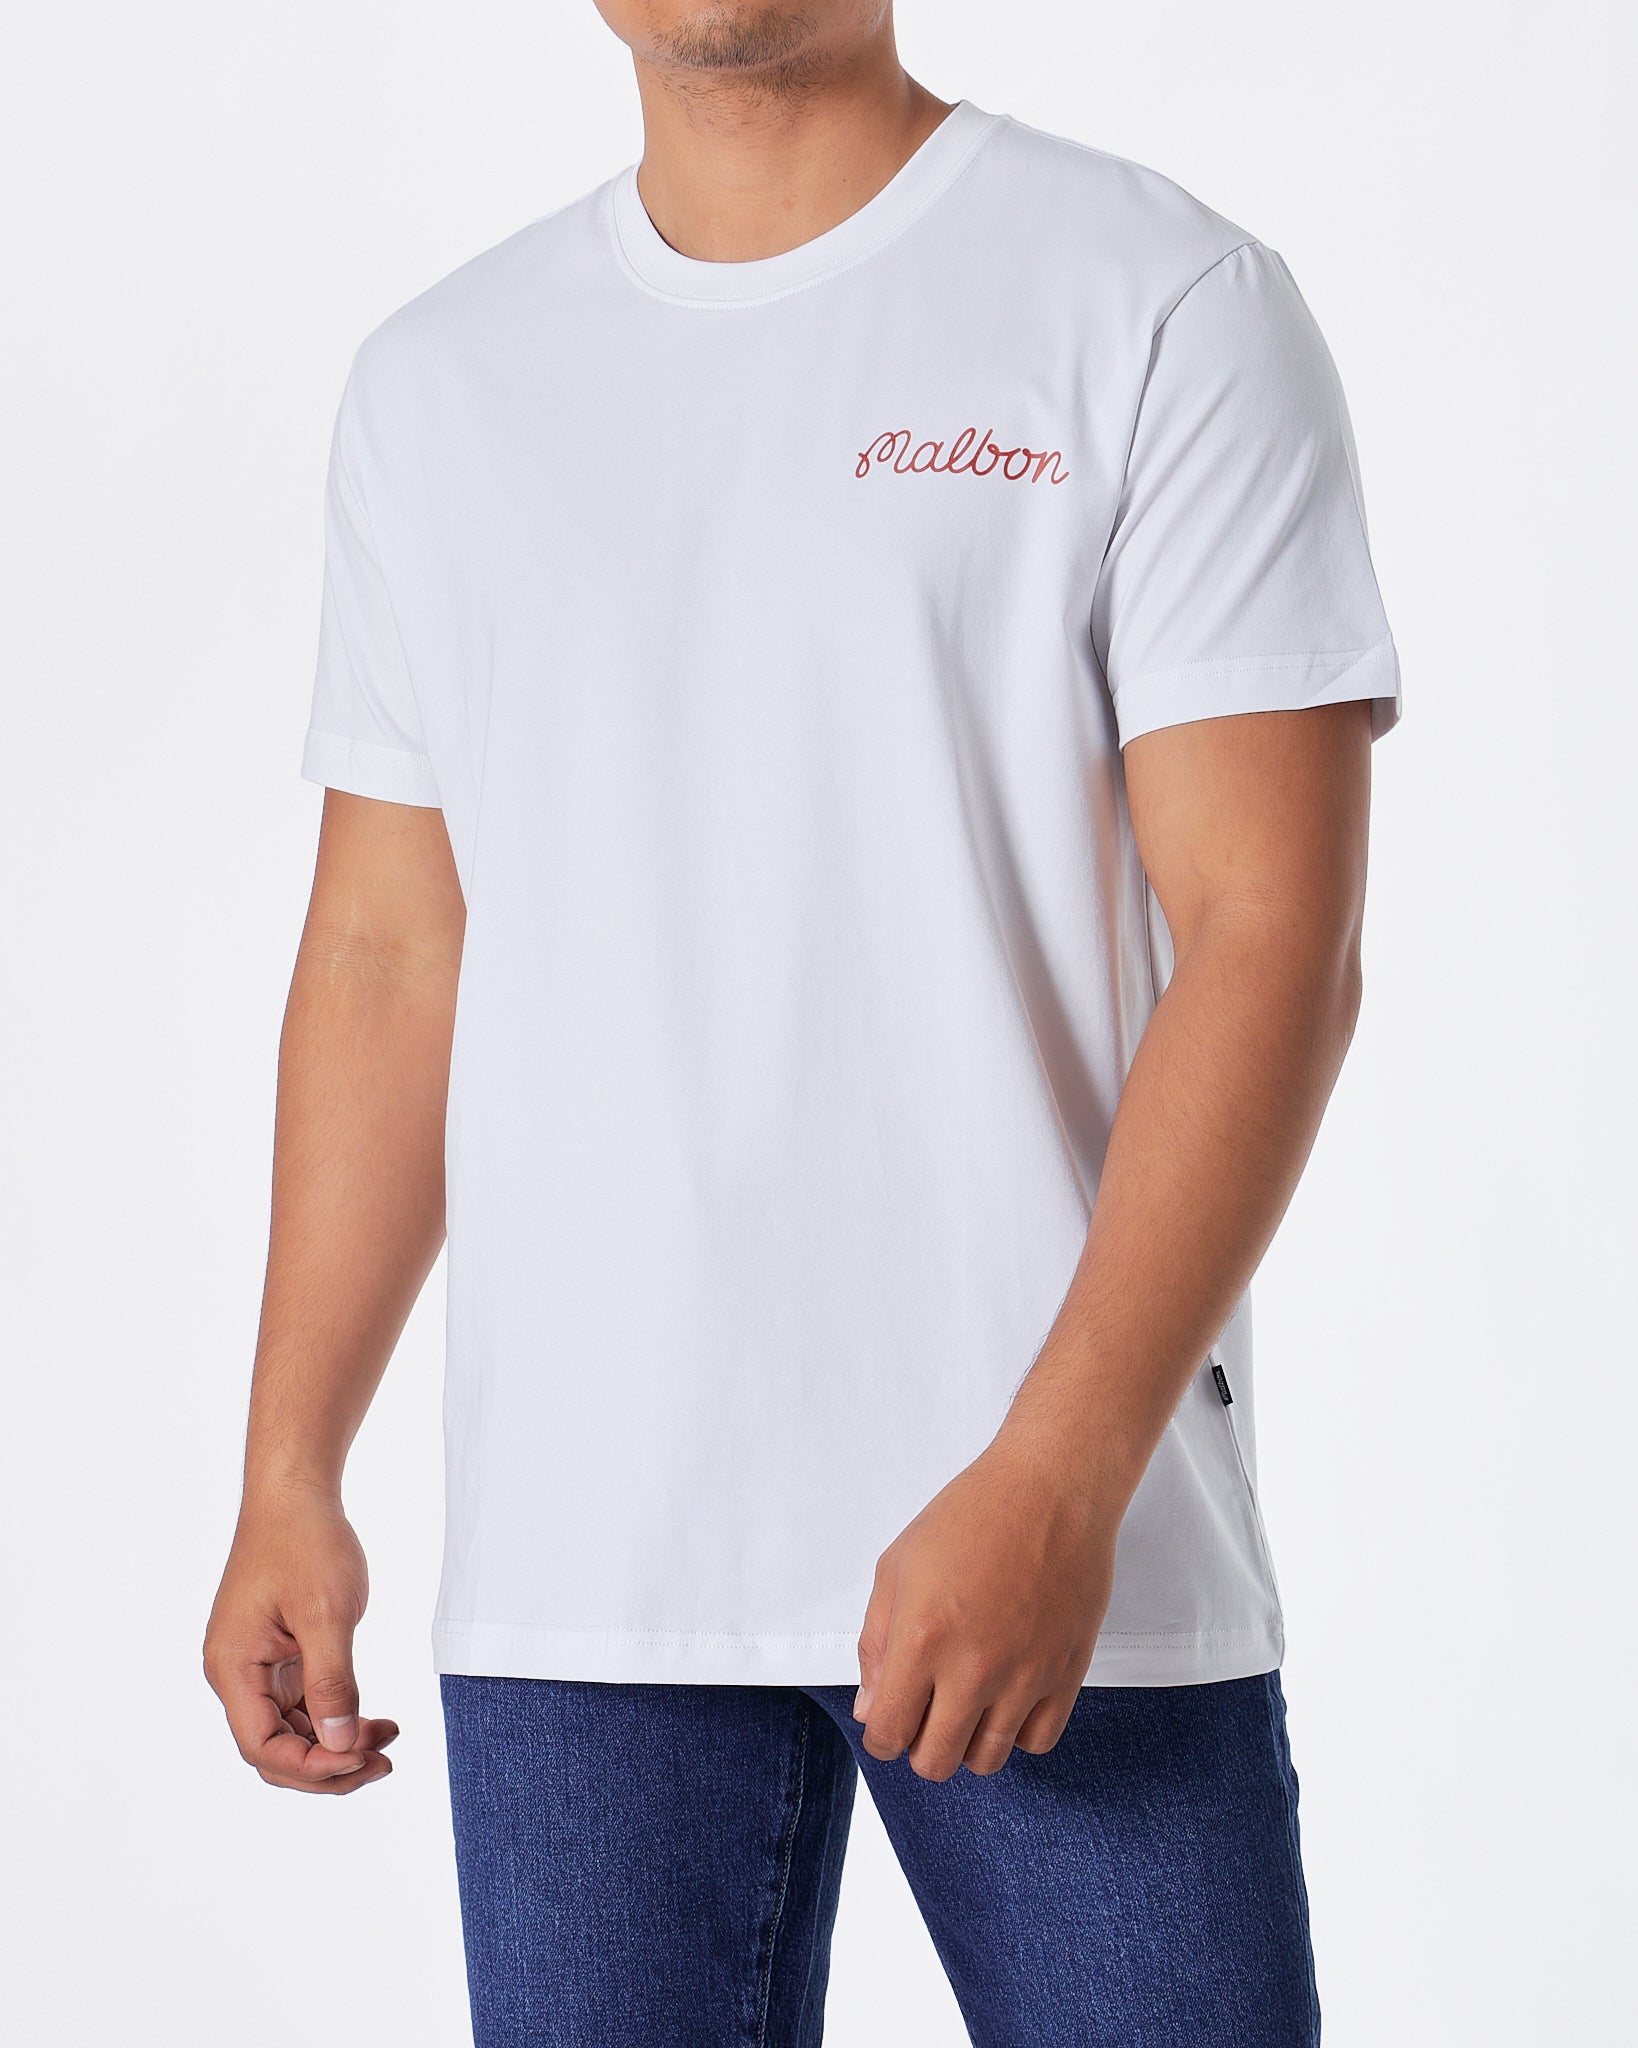 MAL Back Cartoon Unisex White T-Shirt 16.90